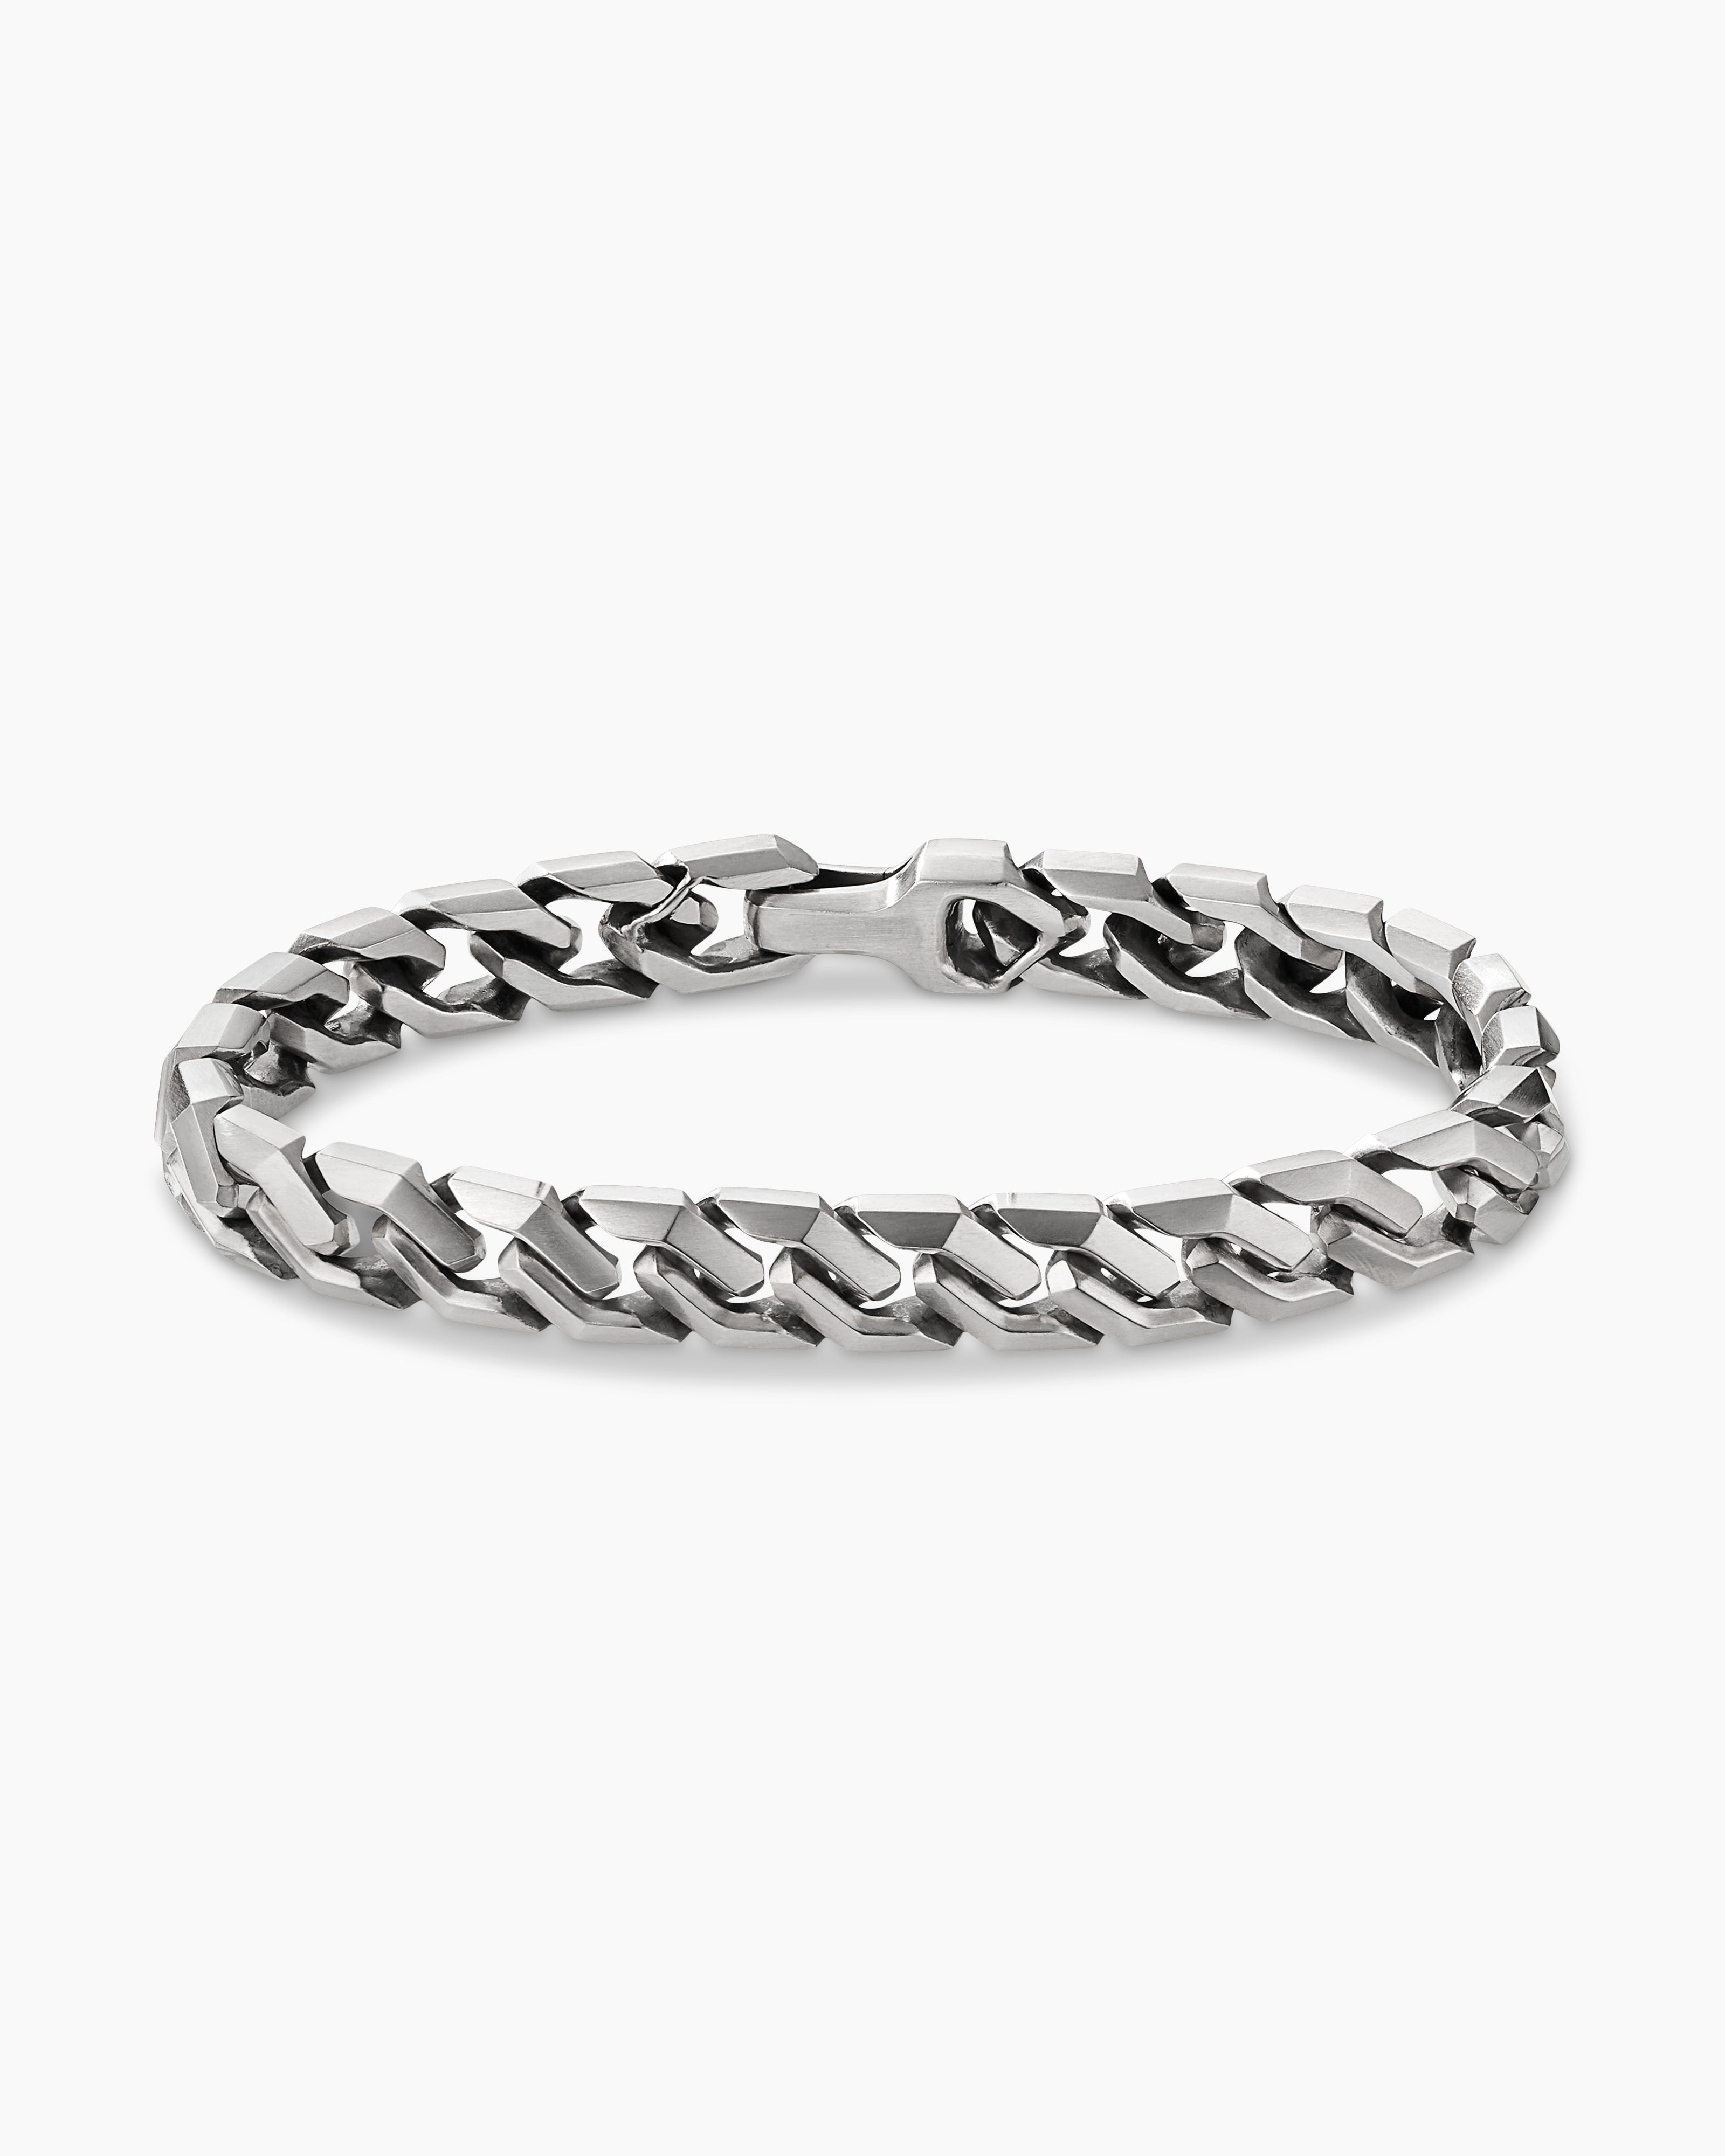 David Yurman Sterling Silver Curb Chain Link Bracelet